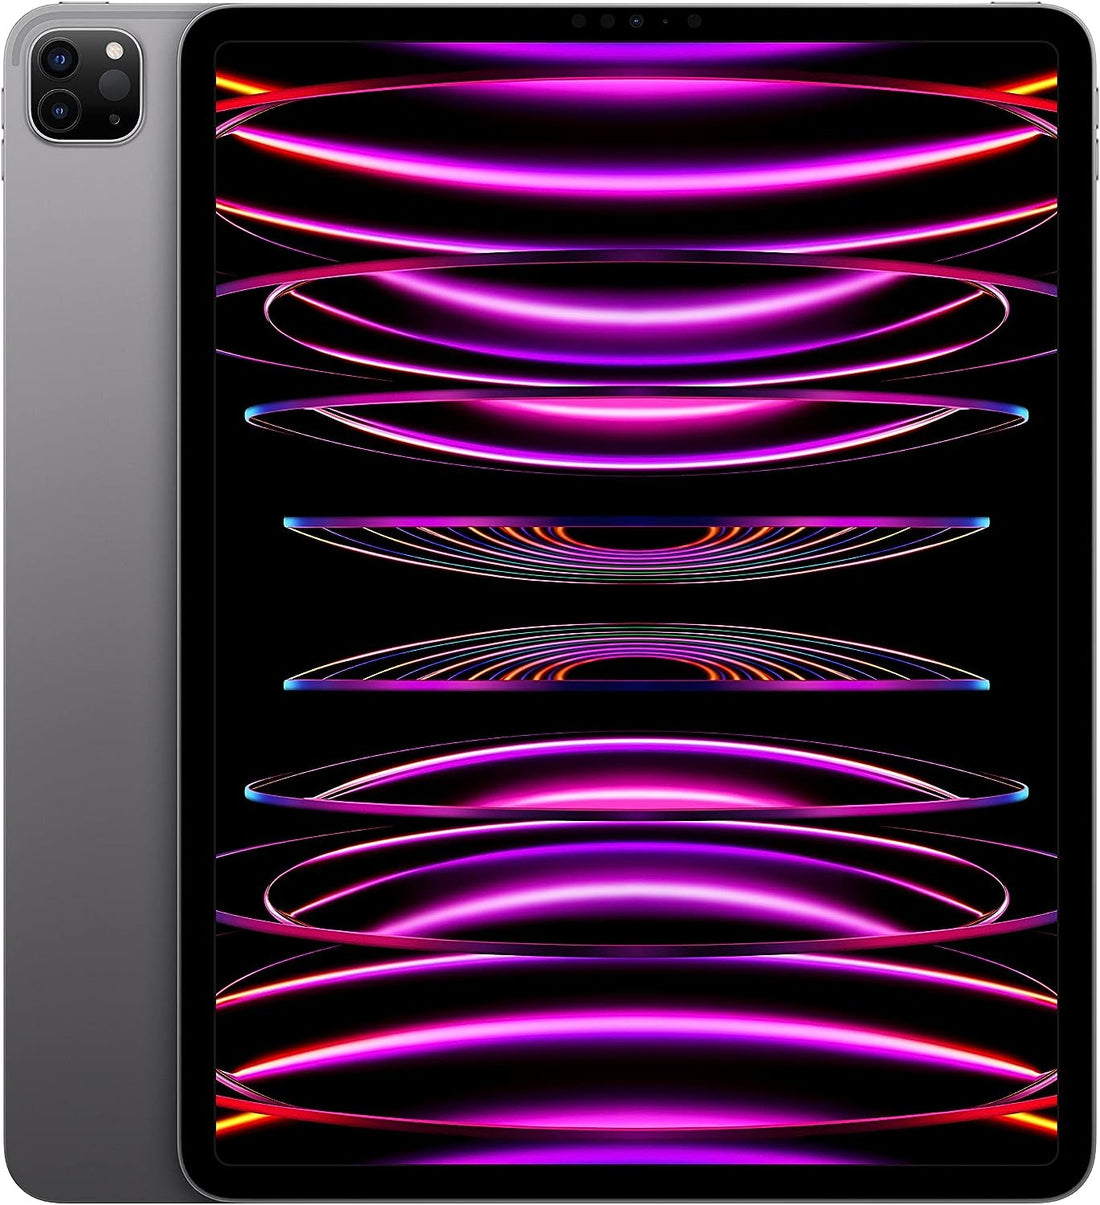 Apple iPad Pro 6th Gen 11in - 128GB (Wifi + Cellular) (Unlocked) - Space Gray (Certified Refurbished)